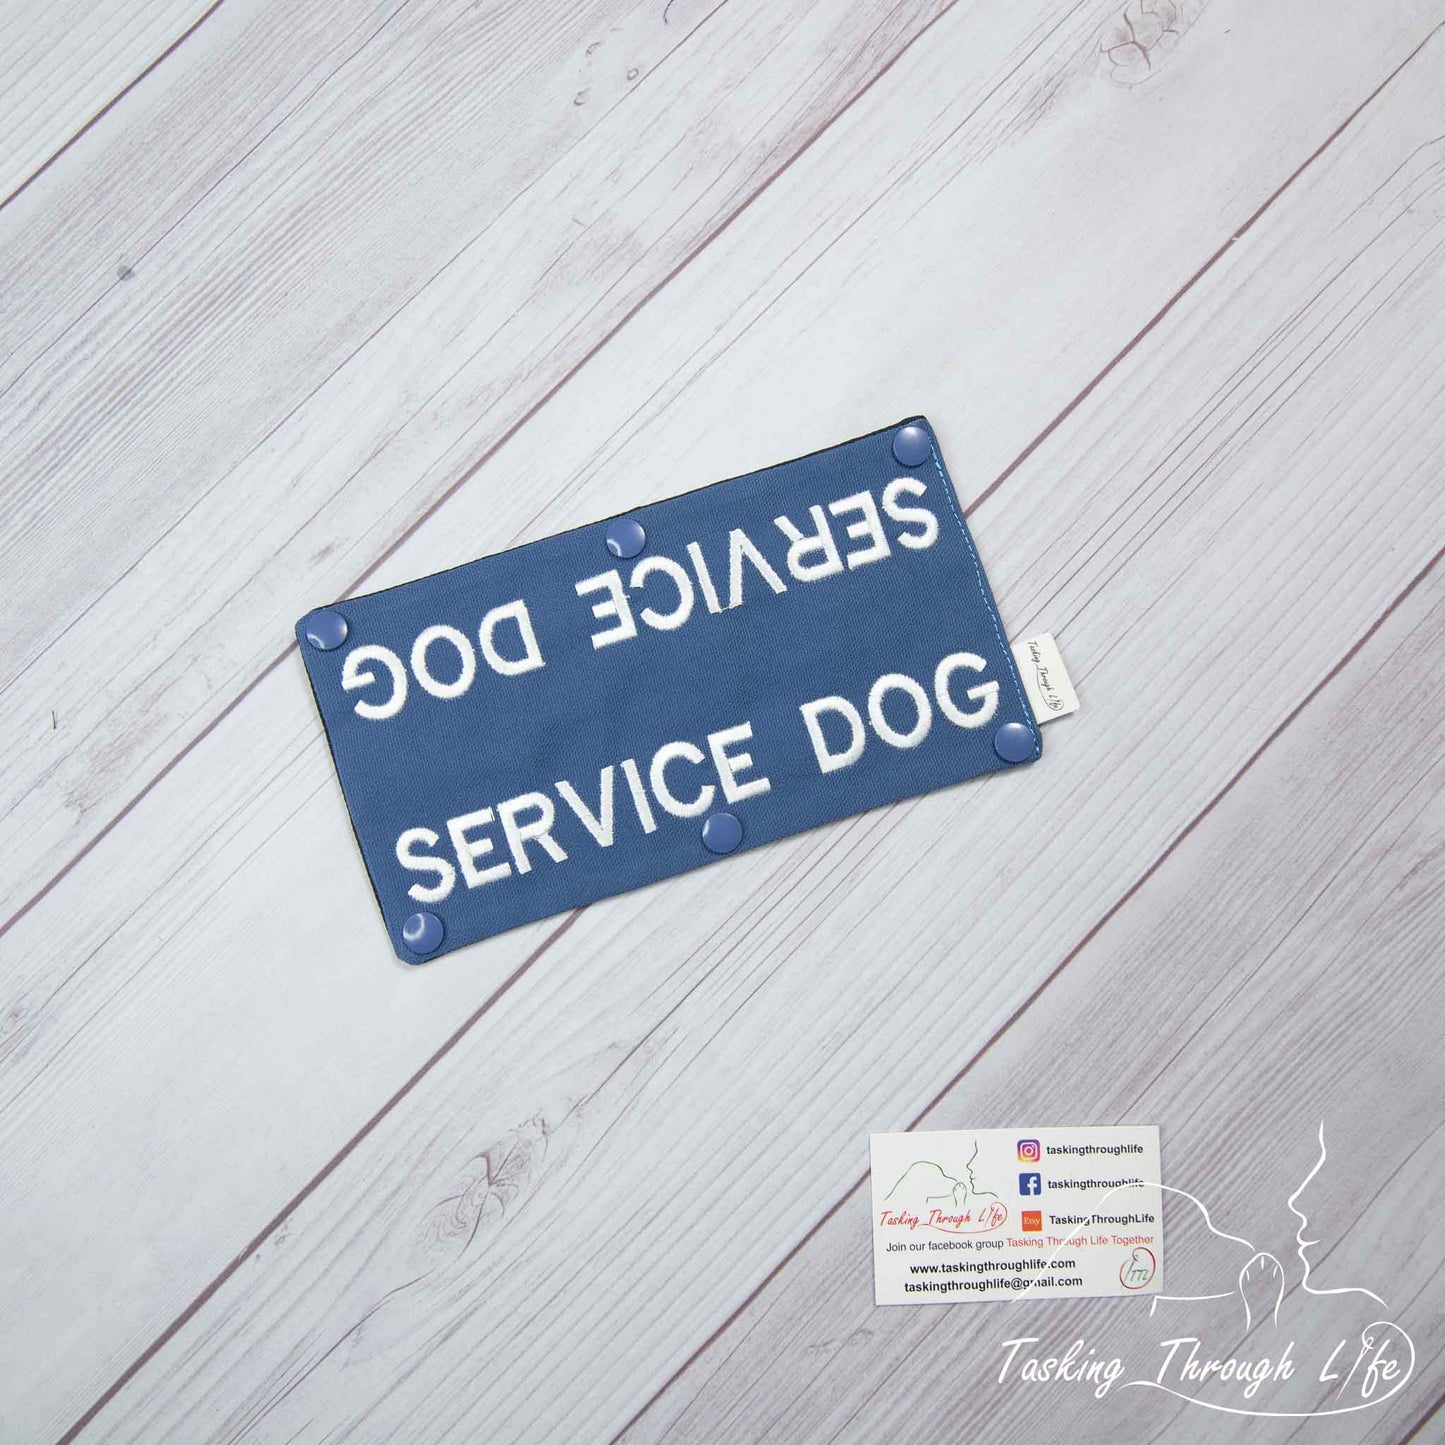 Service Dog Chest Strap Wrap - S24